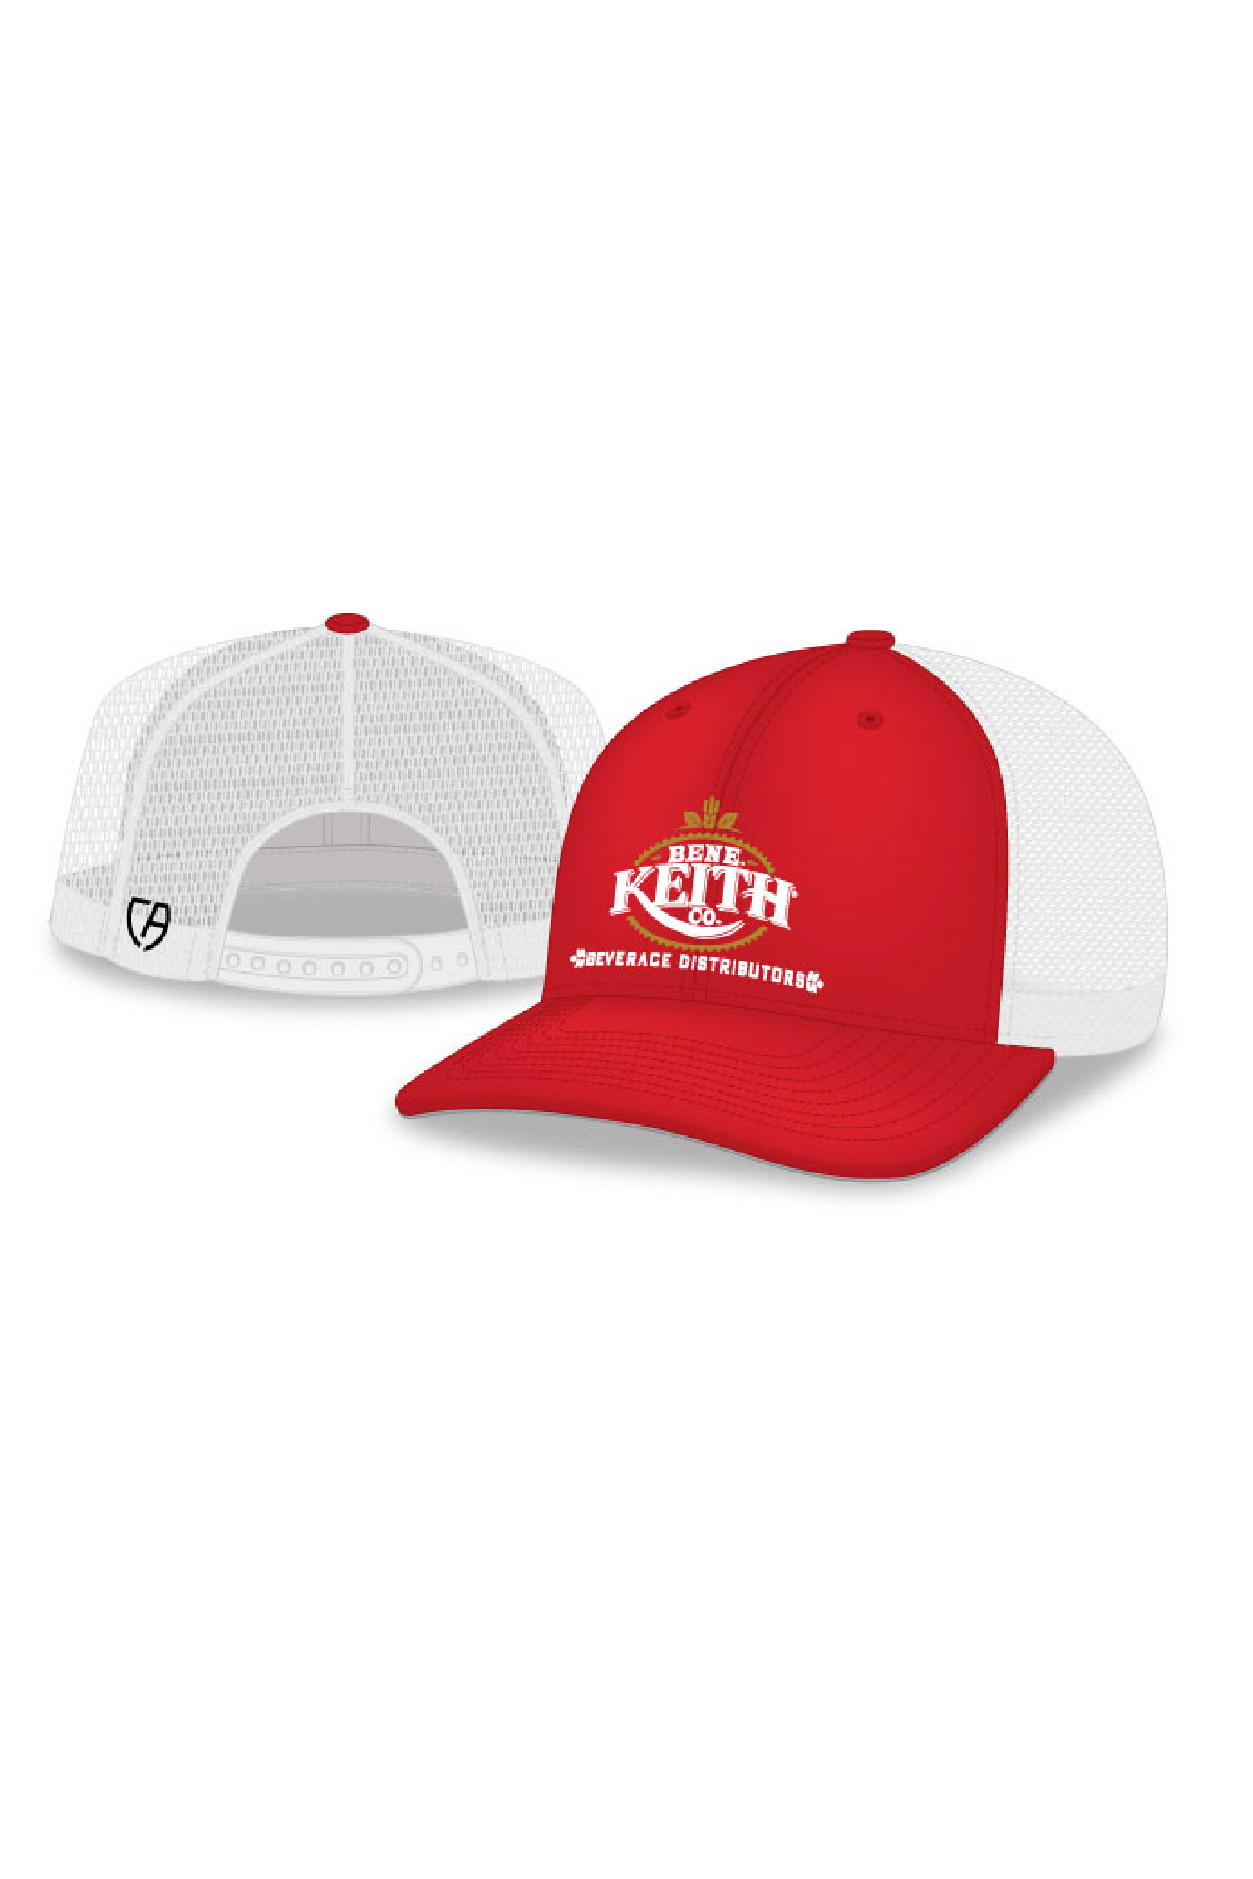 FlexFit 110 Trucker Mesh Back Cap (Red/White) – Ben E Keith Beverage  Uniforms